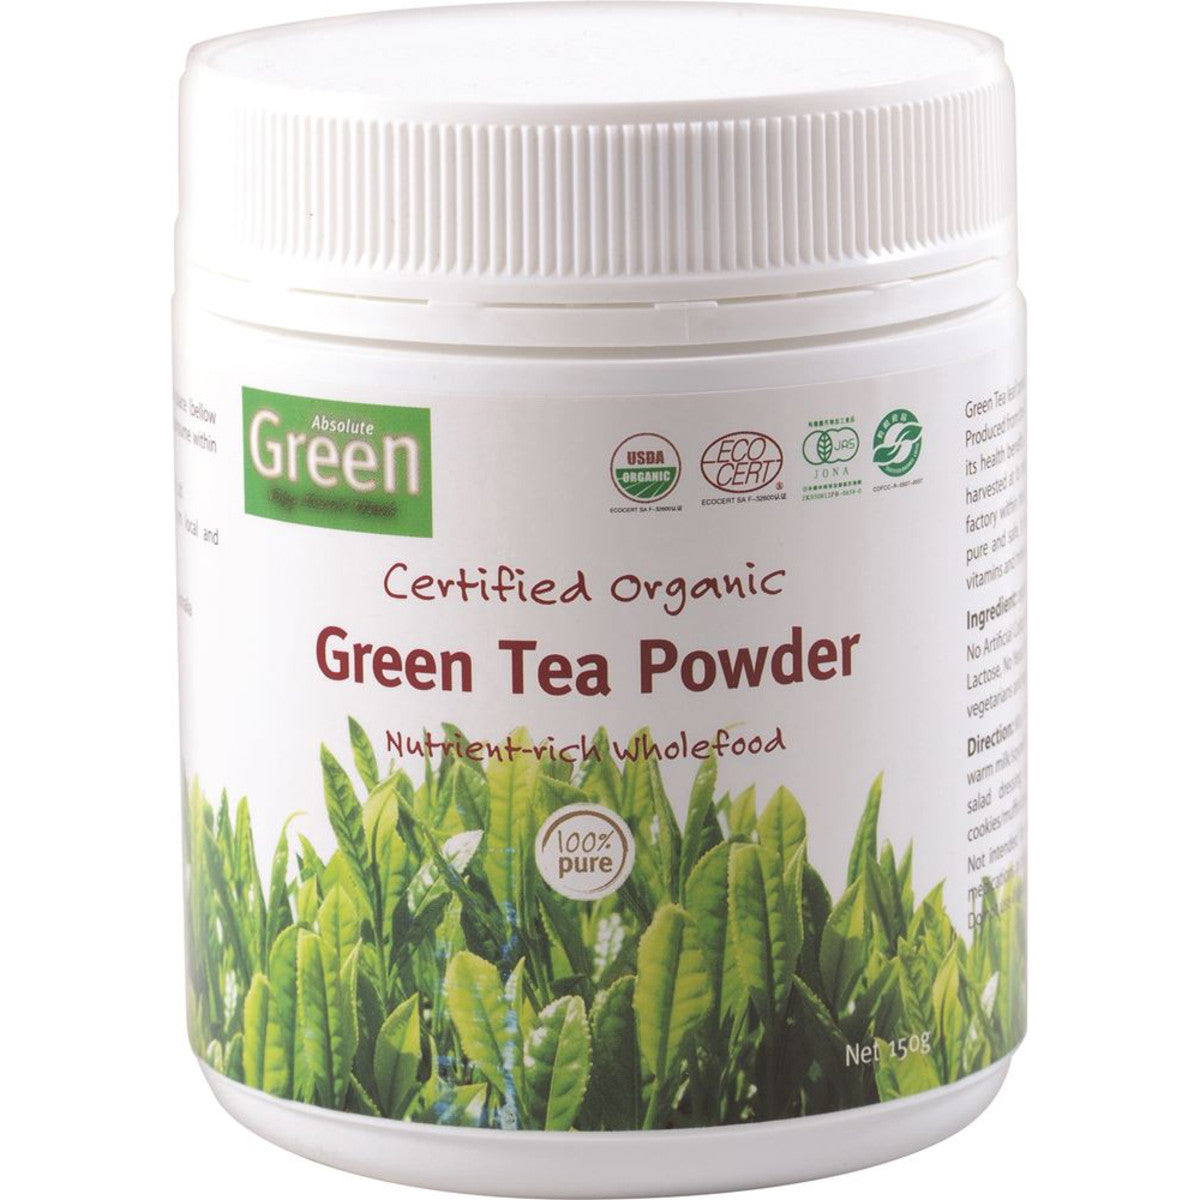 Absolute Green - Certified Organic Green Tea Powder